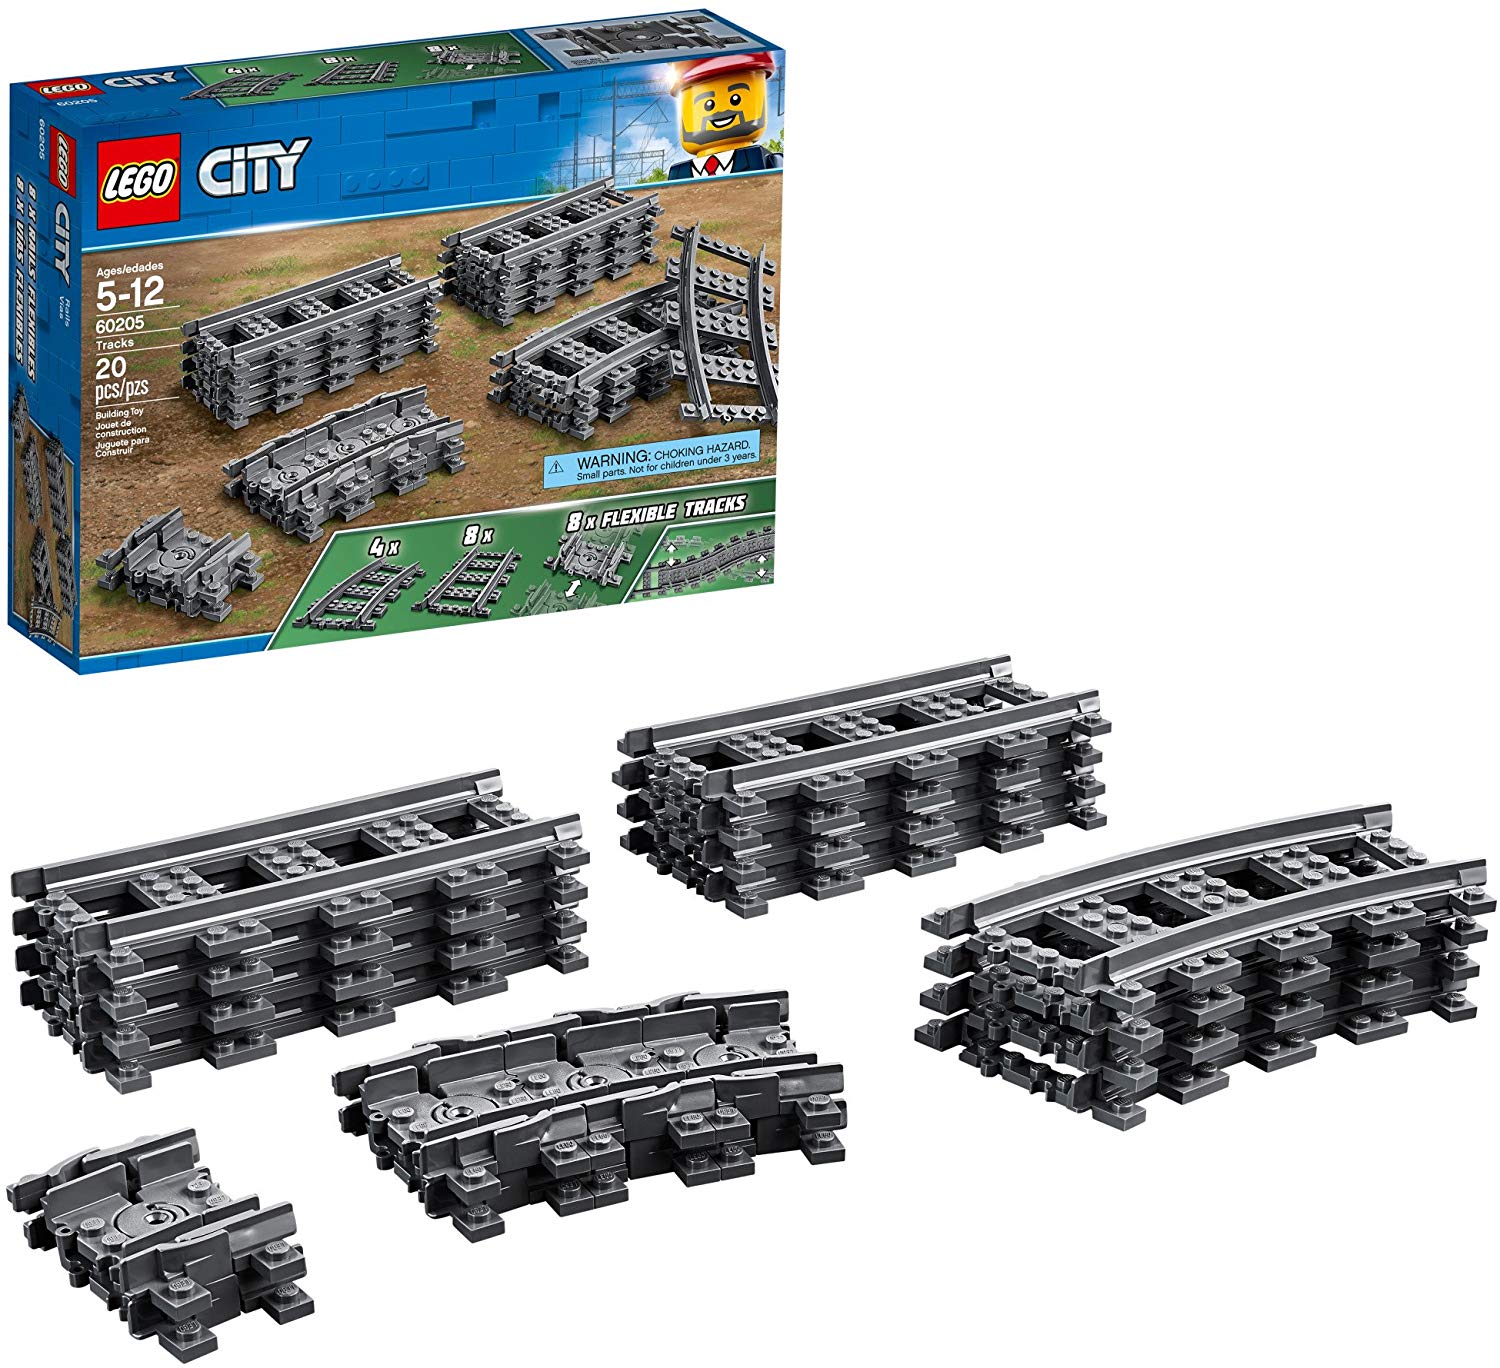 Lego City 60205 – Flexible Track (20 Pieces) – 2018